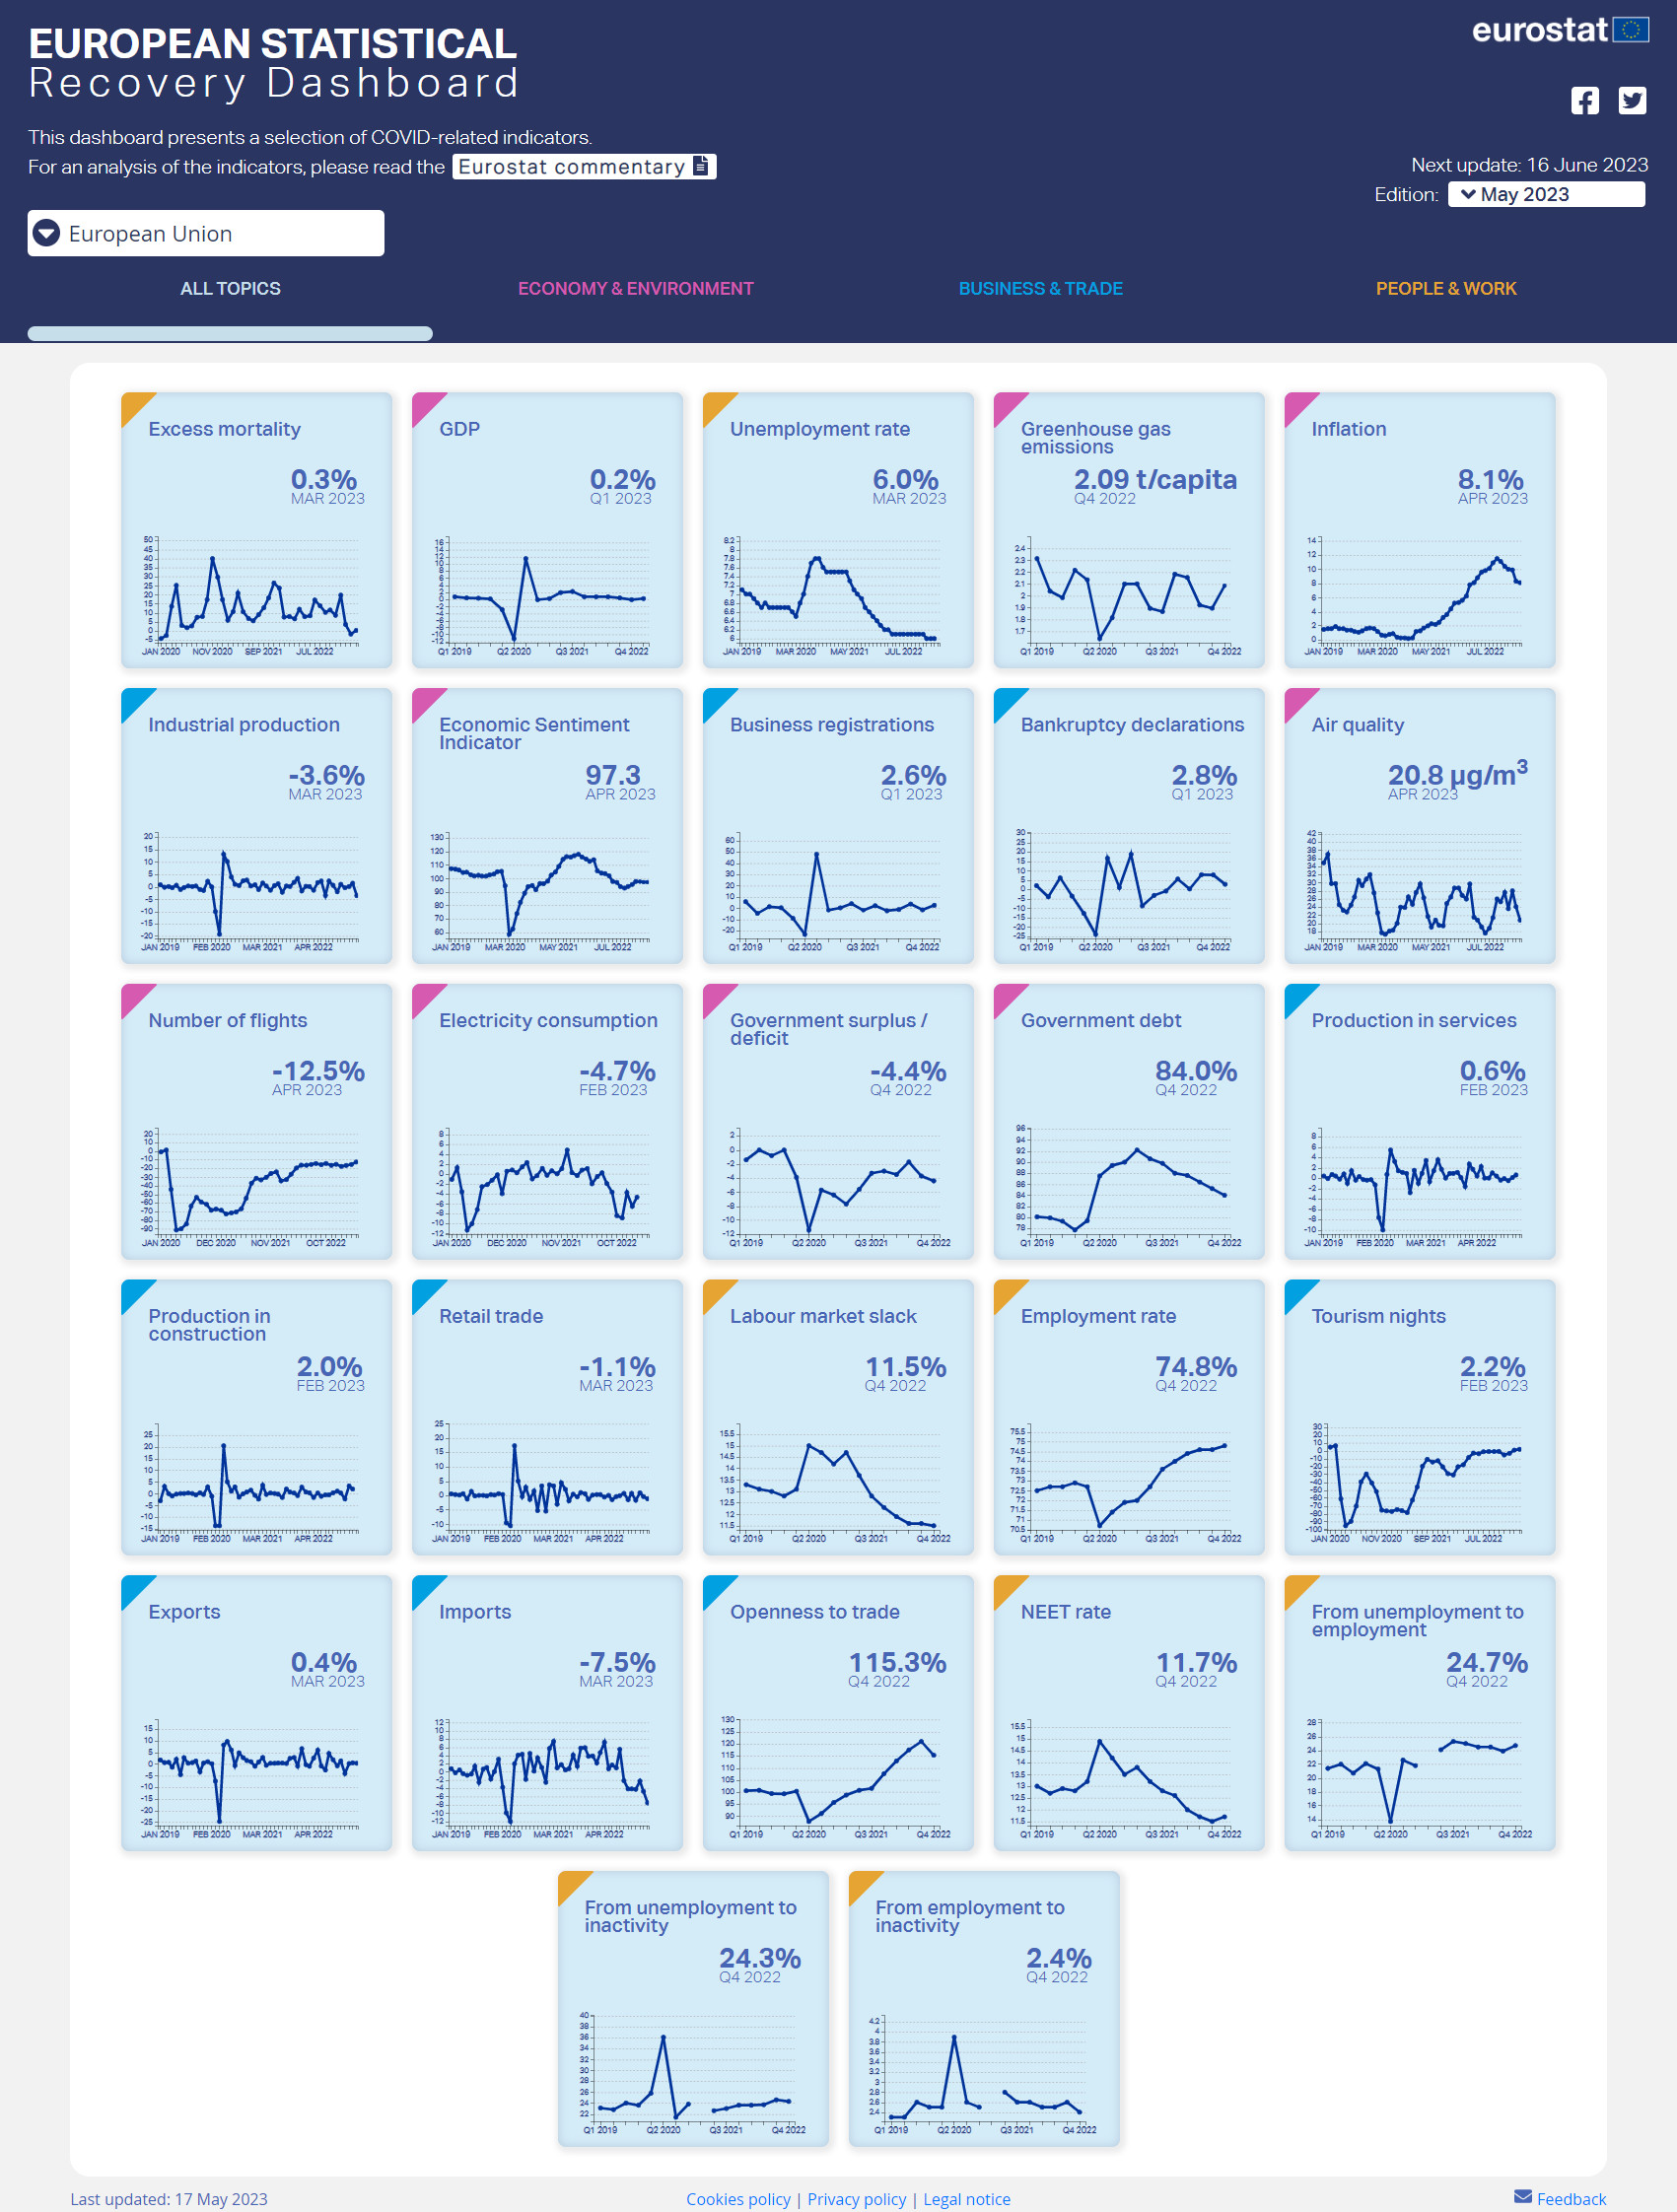 Screenshot: European Statistical Recovery Dashboard - May